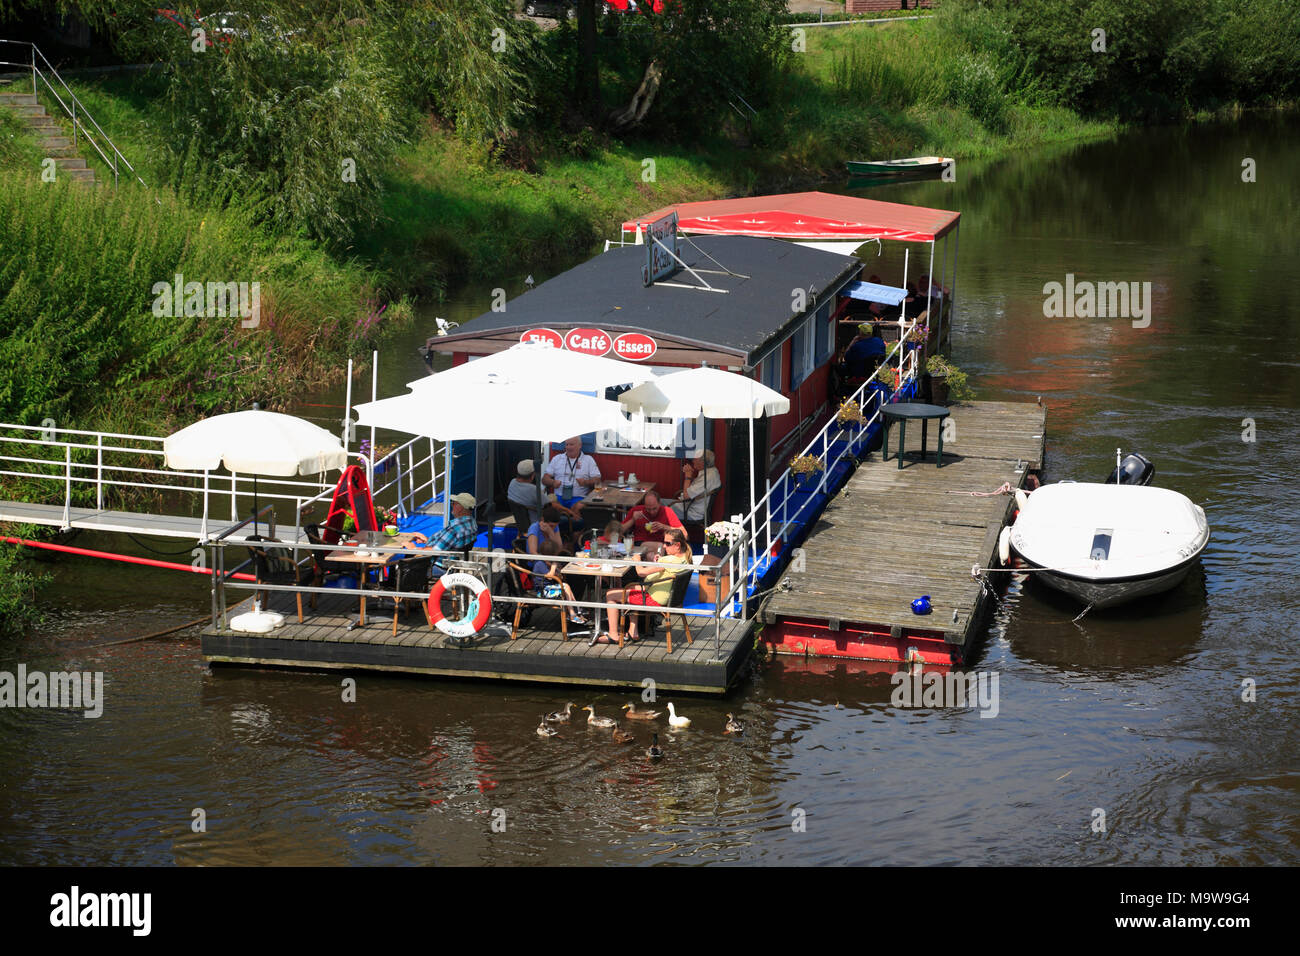 Swimming Restaurant & Cafe HIDDOS ARCHE on river Jeetzel, Hitzacker (Elbe), Lower Saxony, Germany, Europe Stock Photo